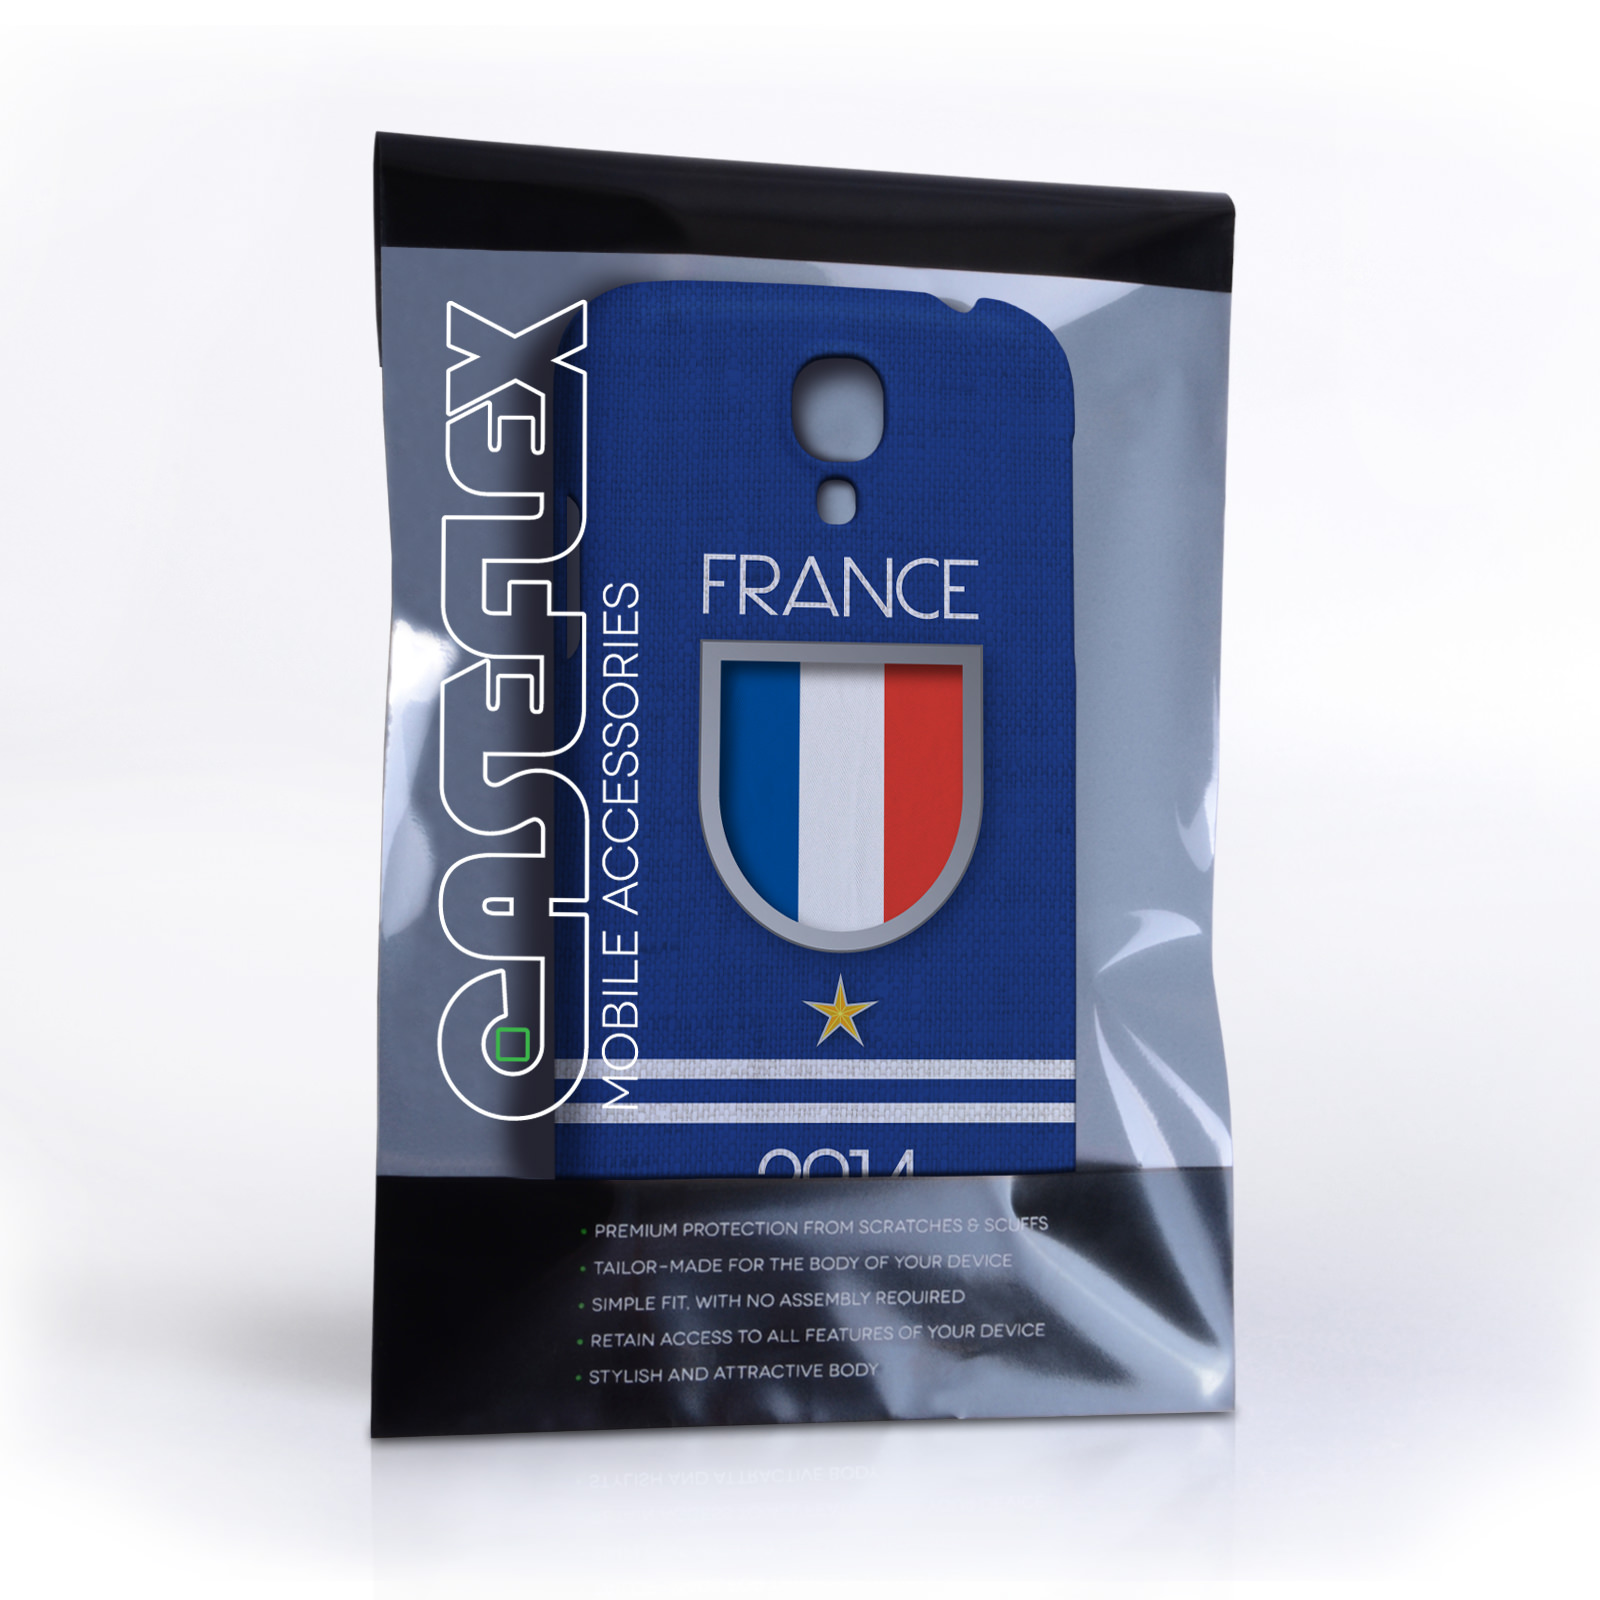 Caseflex Samsung Galaxy S4 France World Cup Case